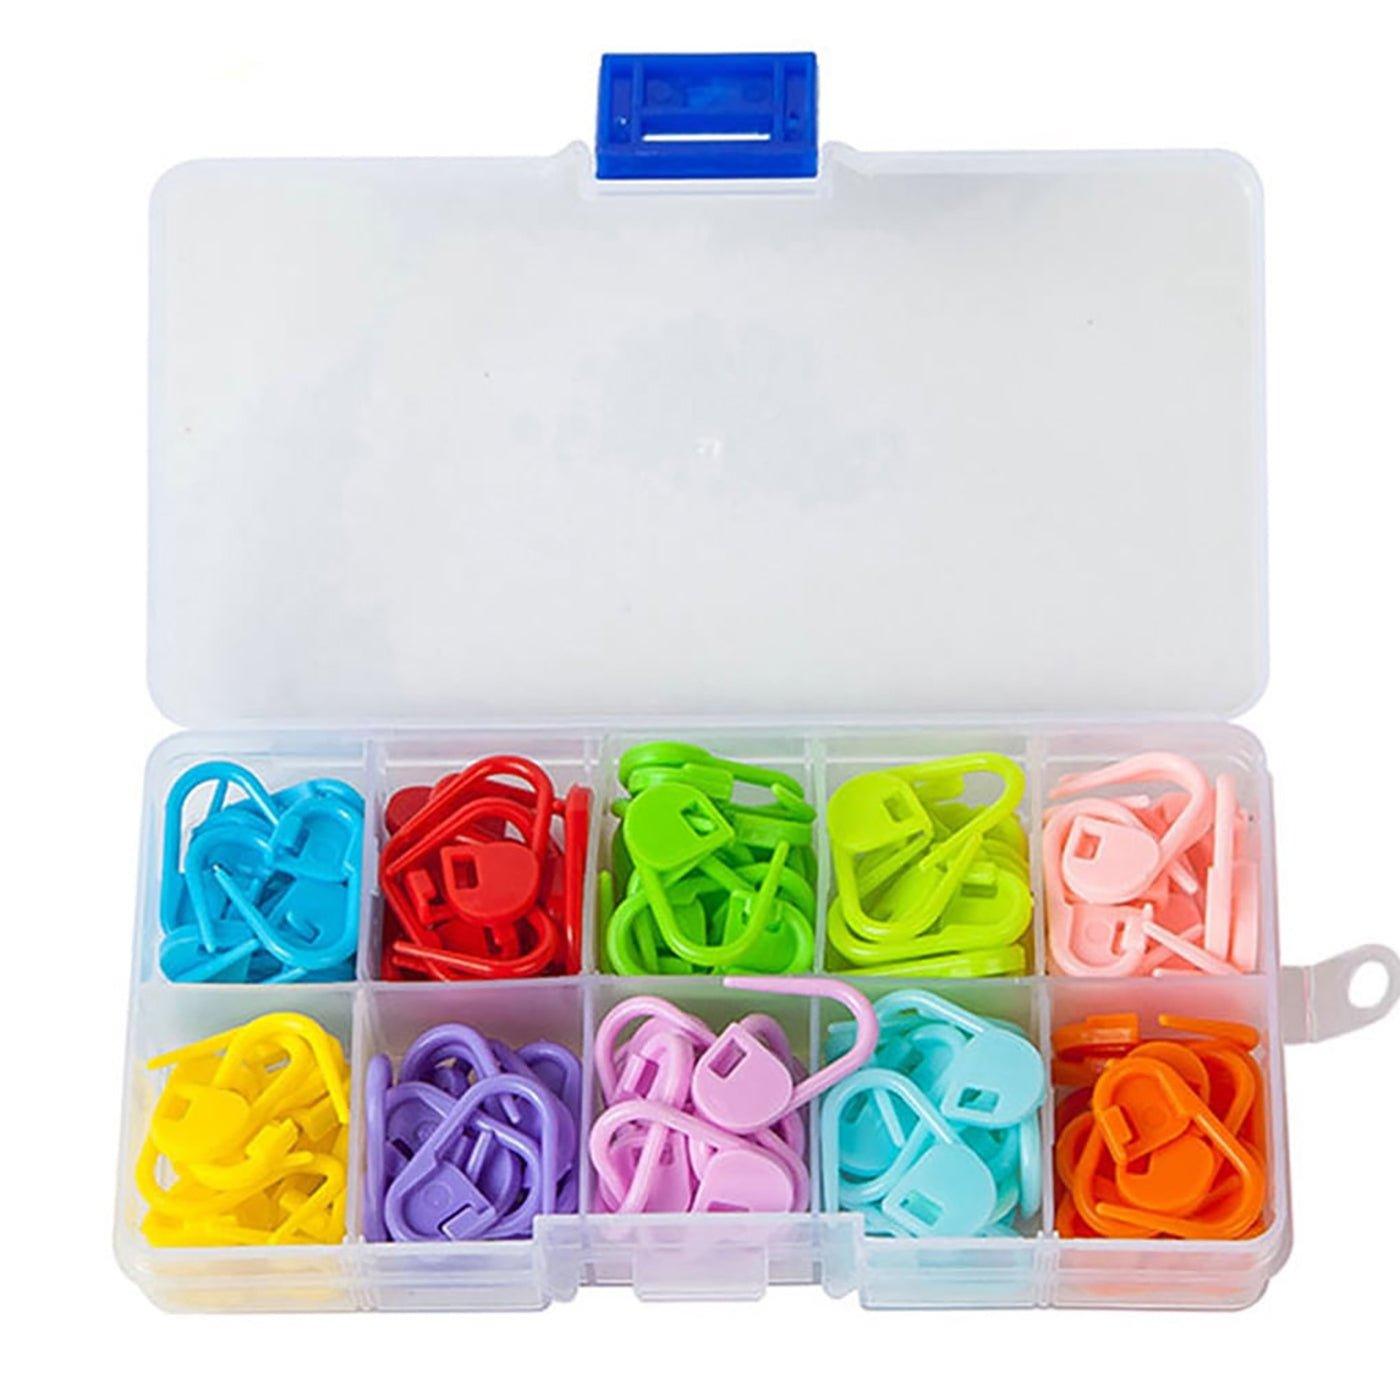 120 Locking Stitch Markers in Plastic Case - BlingBlingYarn